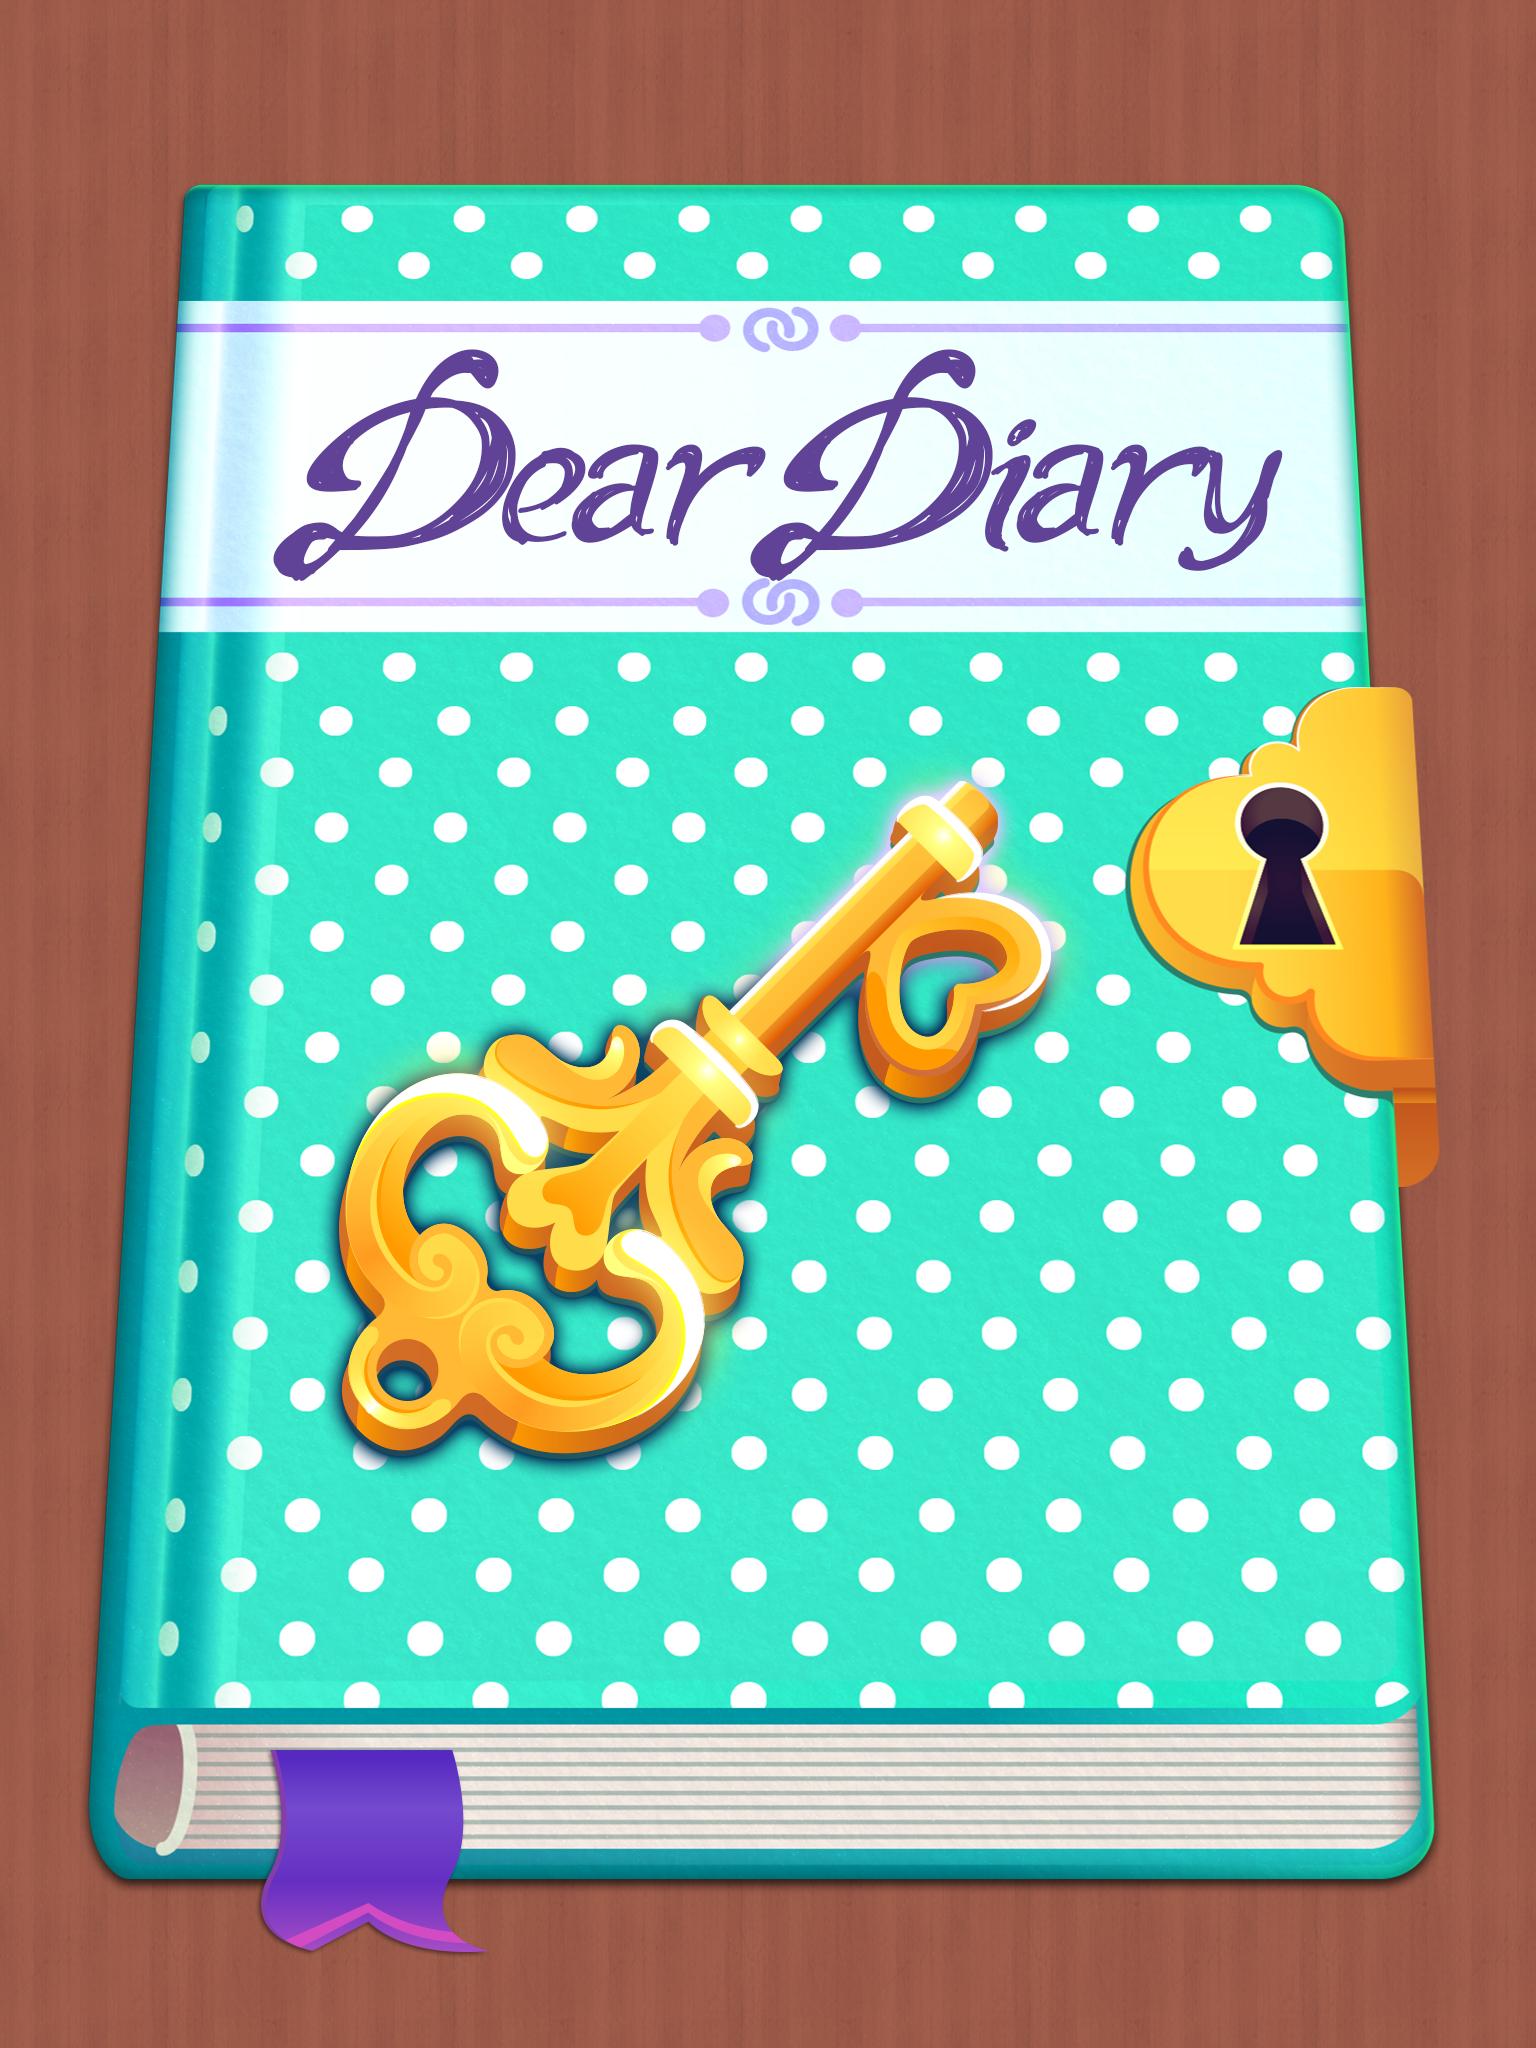 Dear Diary Teen Interactive Story Game 1.4.8 Screenshot 15